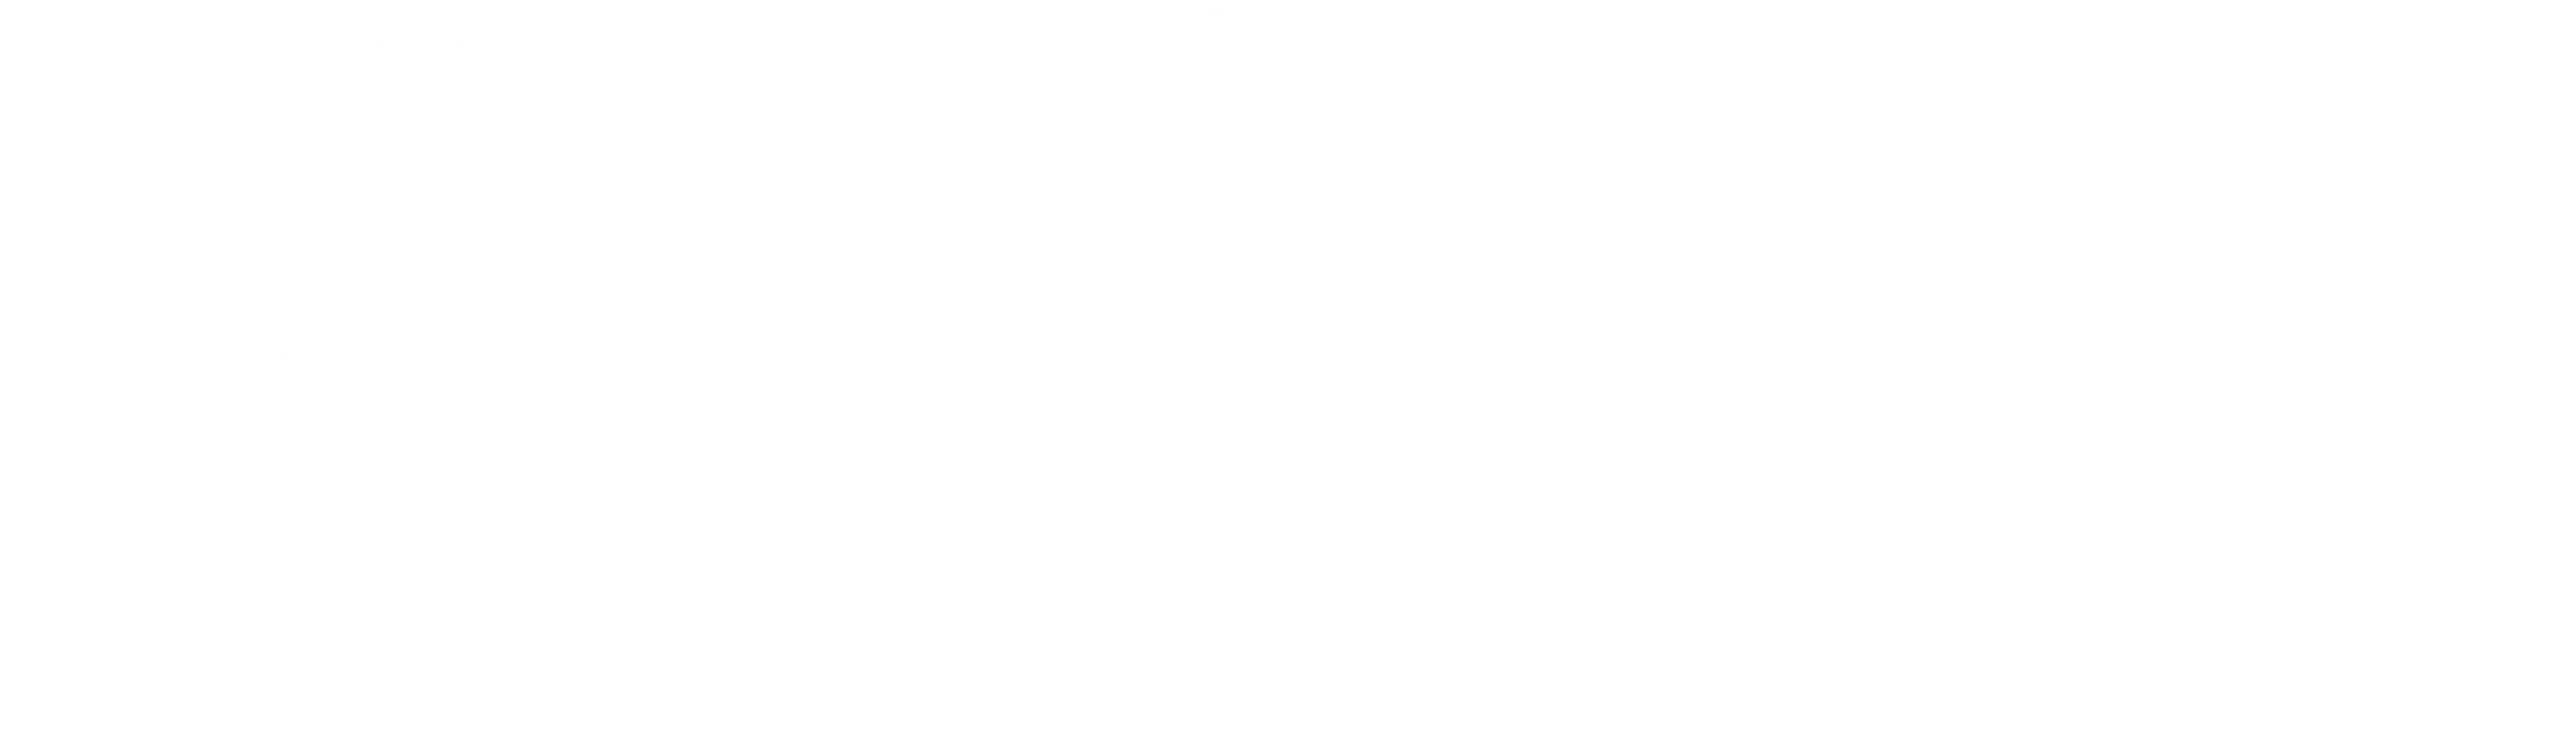 Monash University logo white